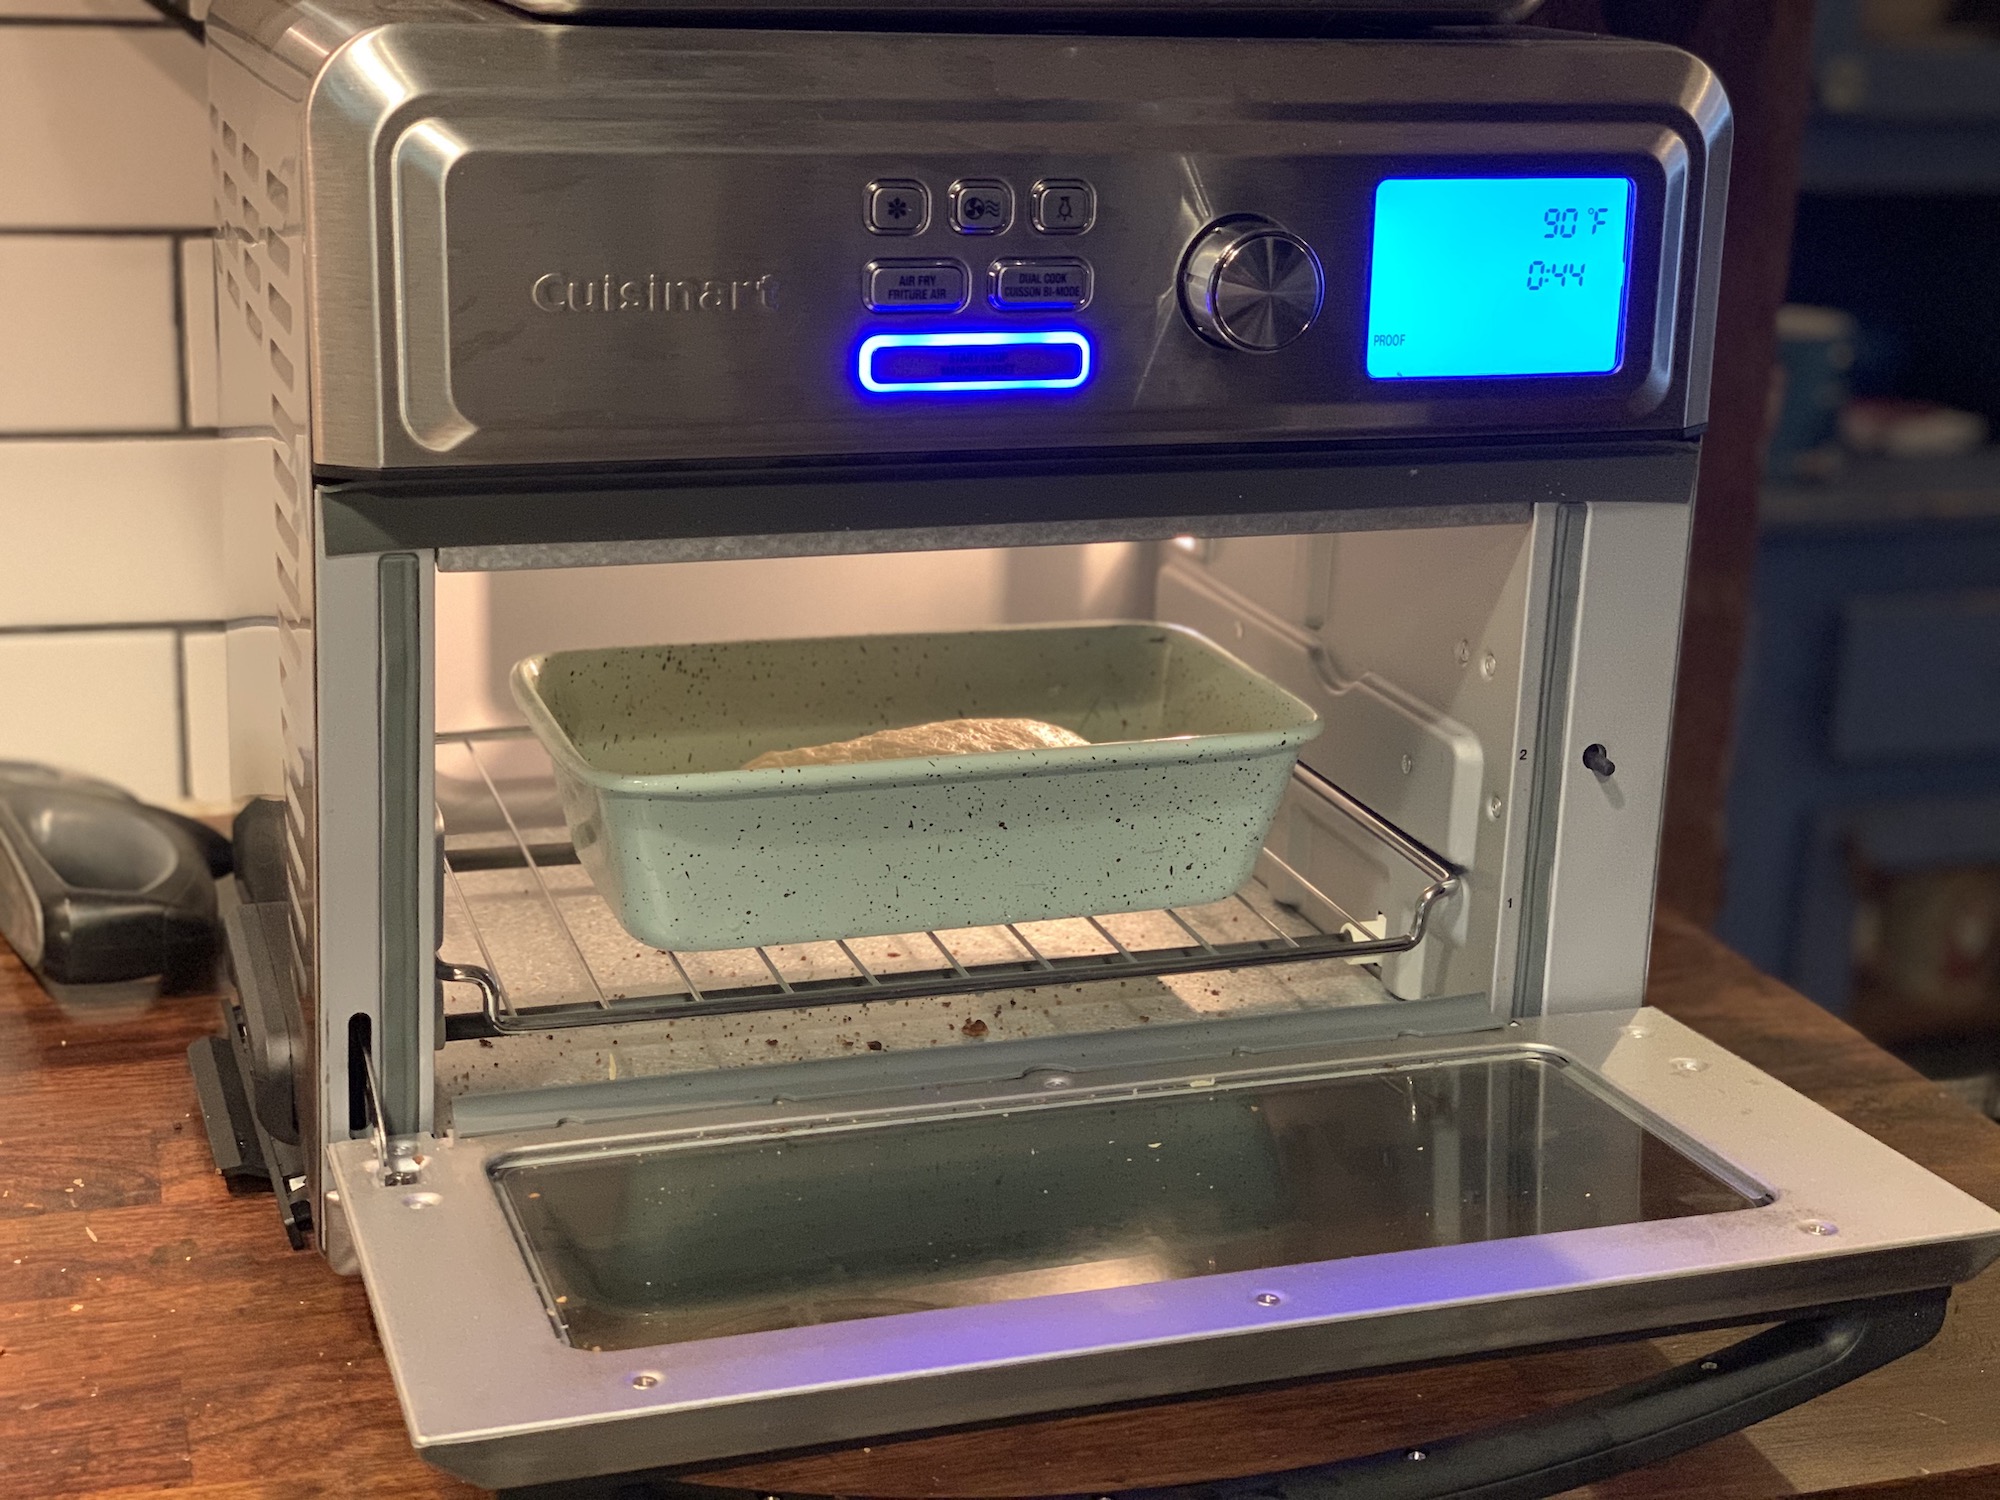 https://blog.bestbuy.ca/wp-content/uploads/2020/05/Baking-bread-Cuisinart-AirFryer.jpg